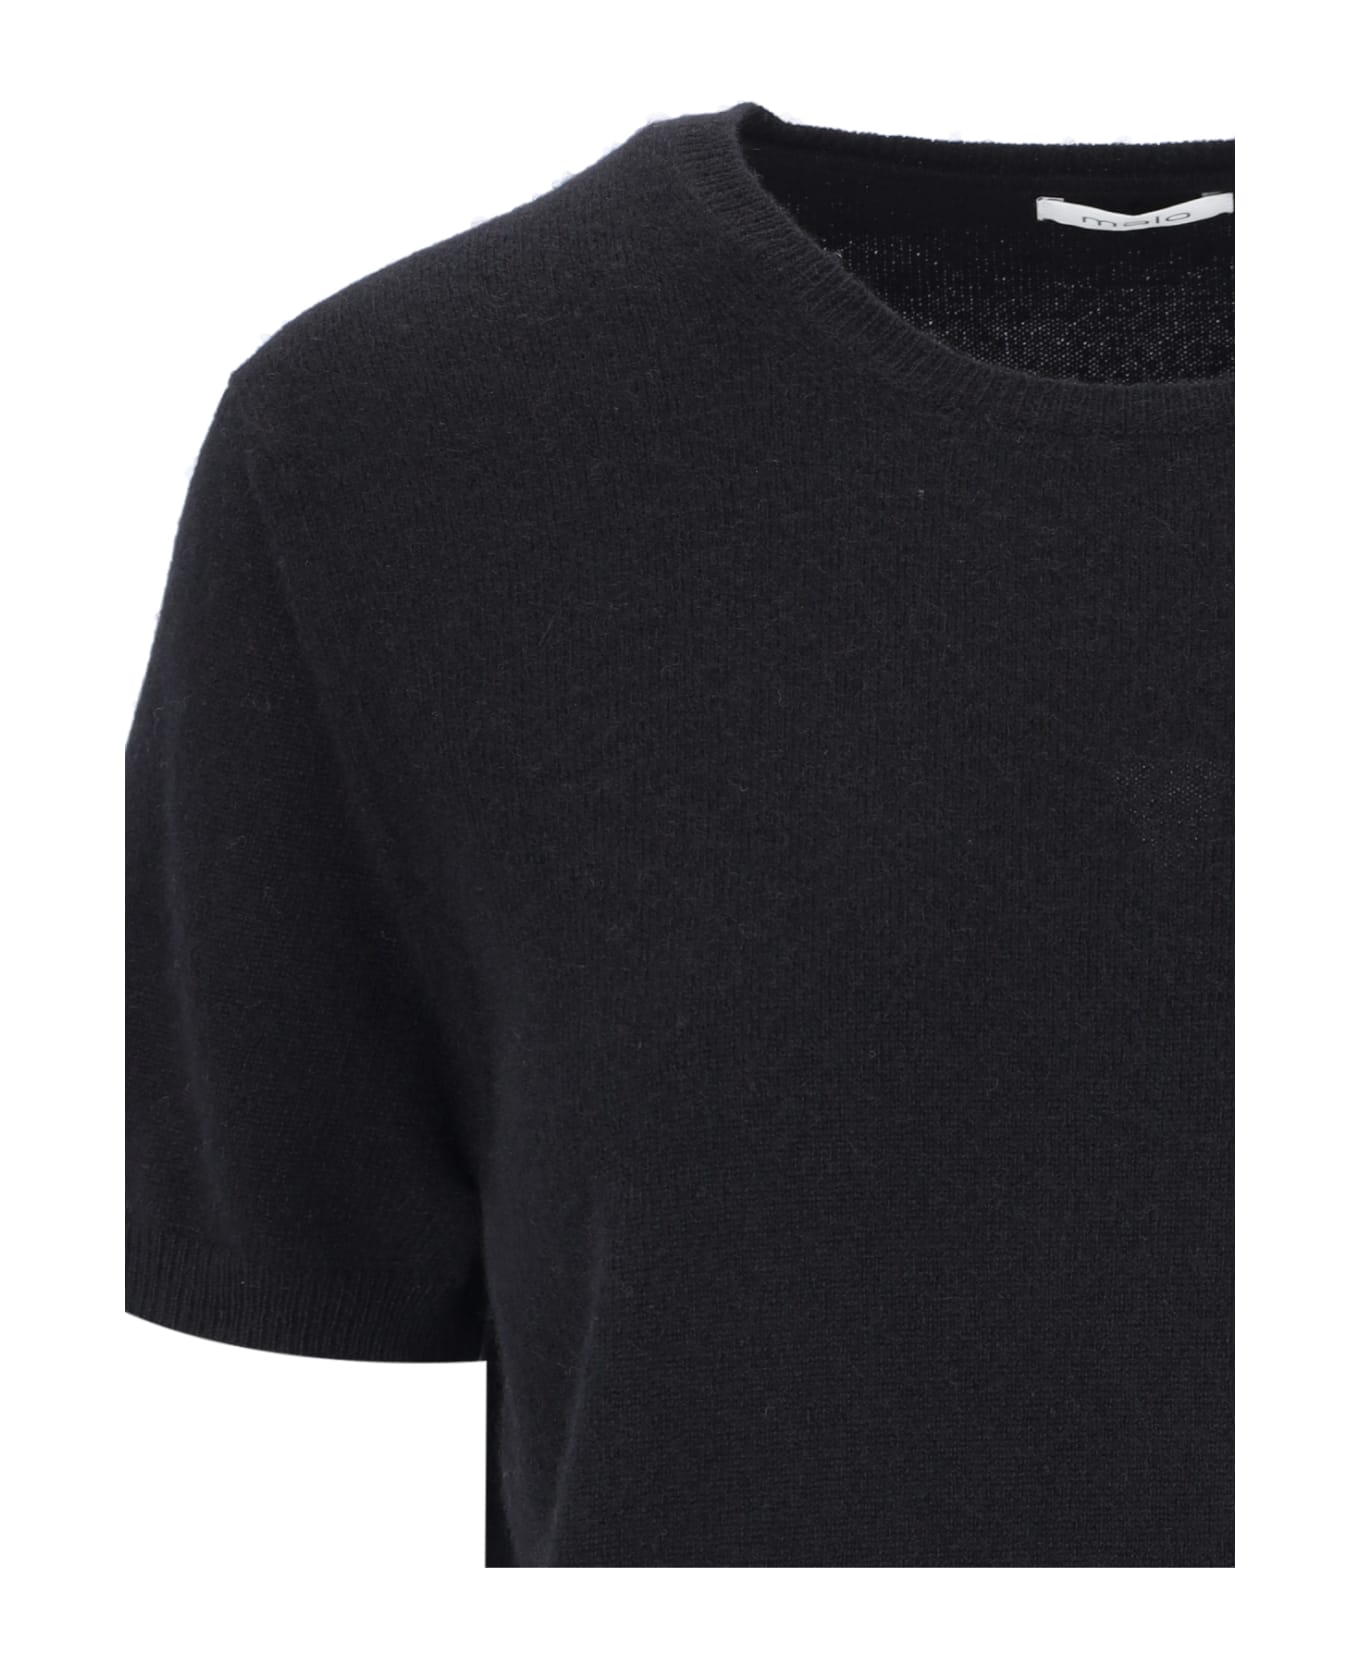 Malo Cashmere Sweater - Black   ニットウェア